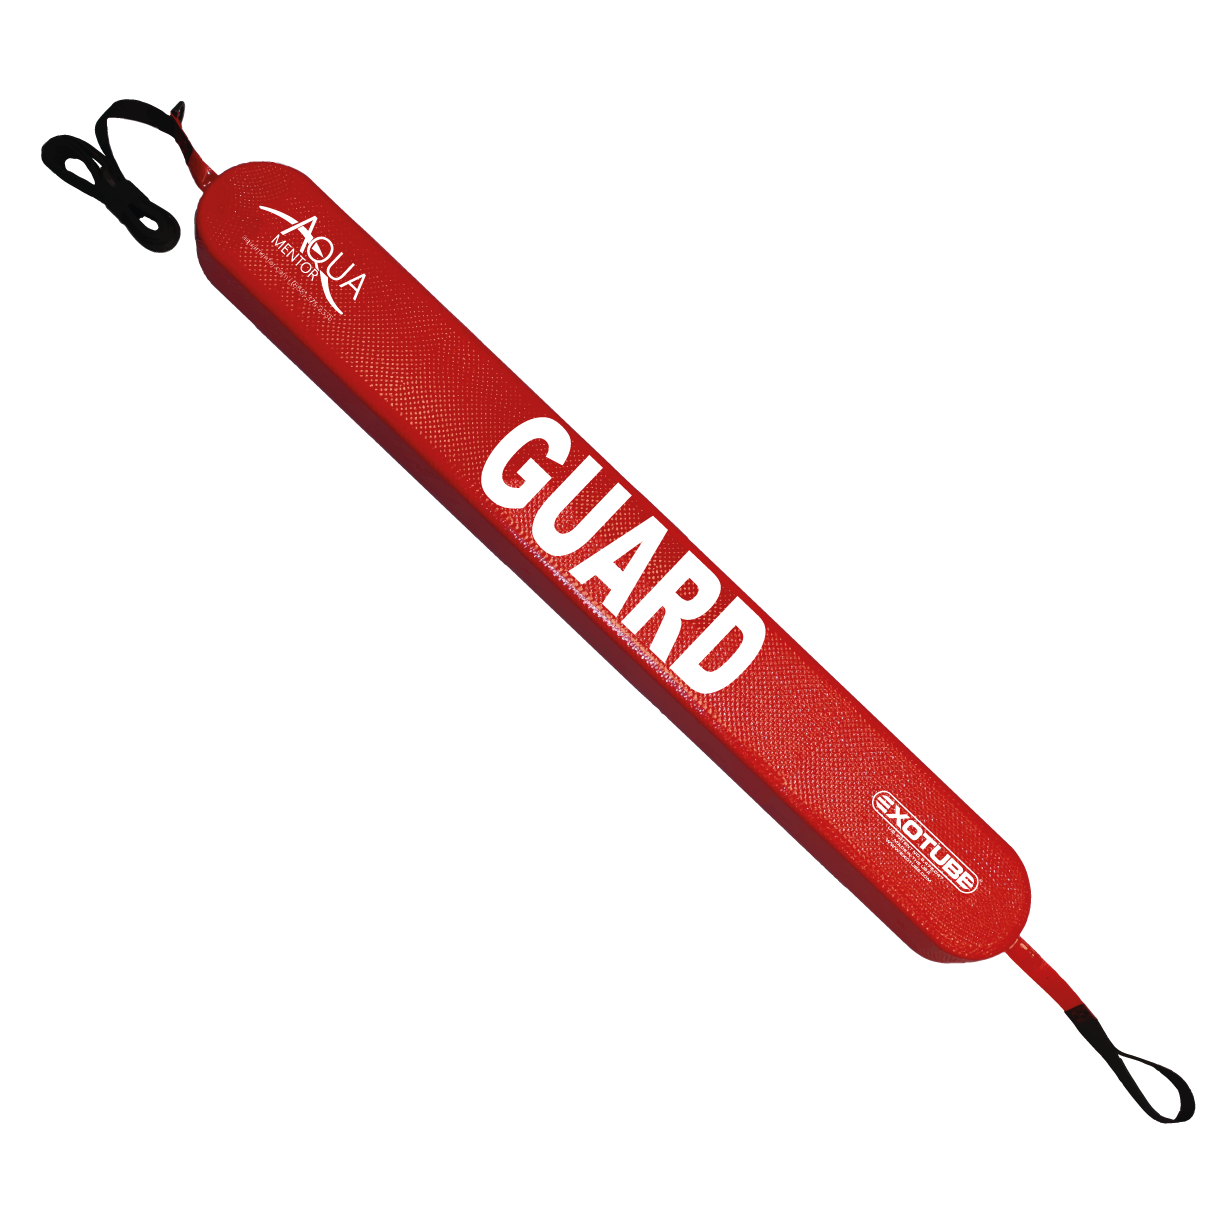 Lifesaving first aid swim. Lifeguard clipart lifeguard rescue